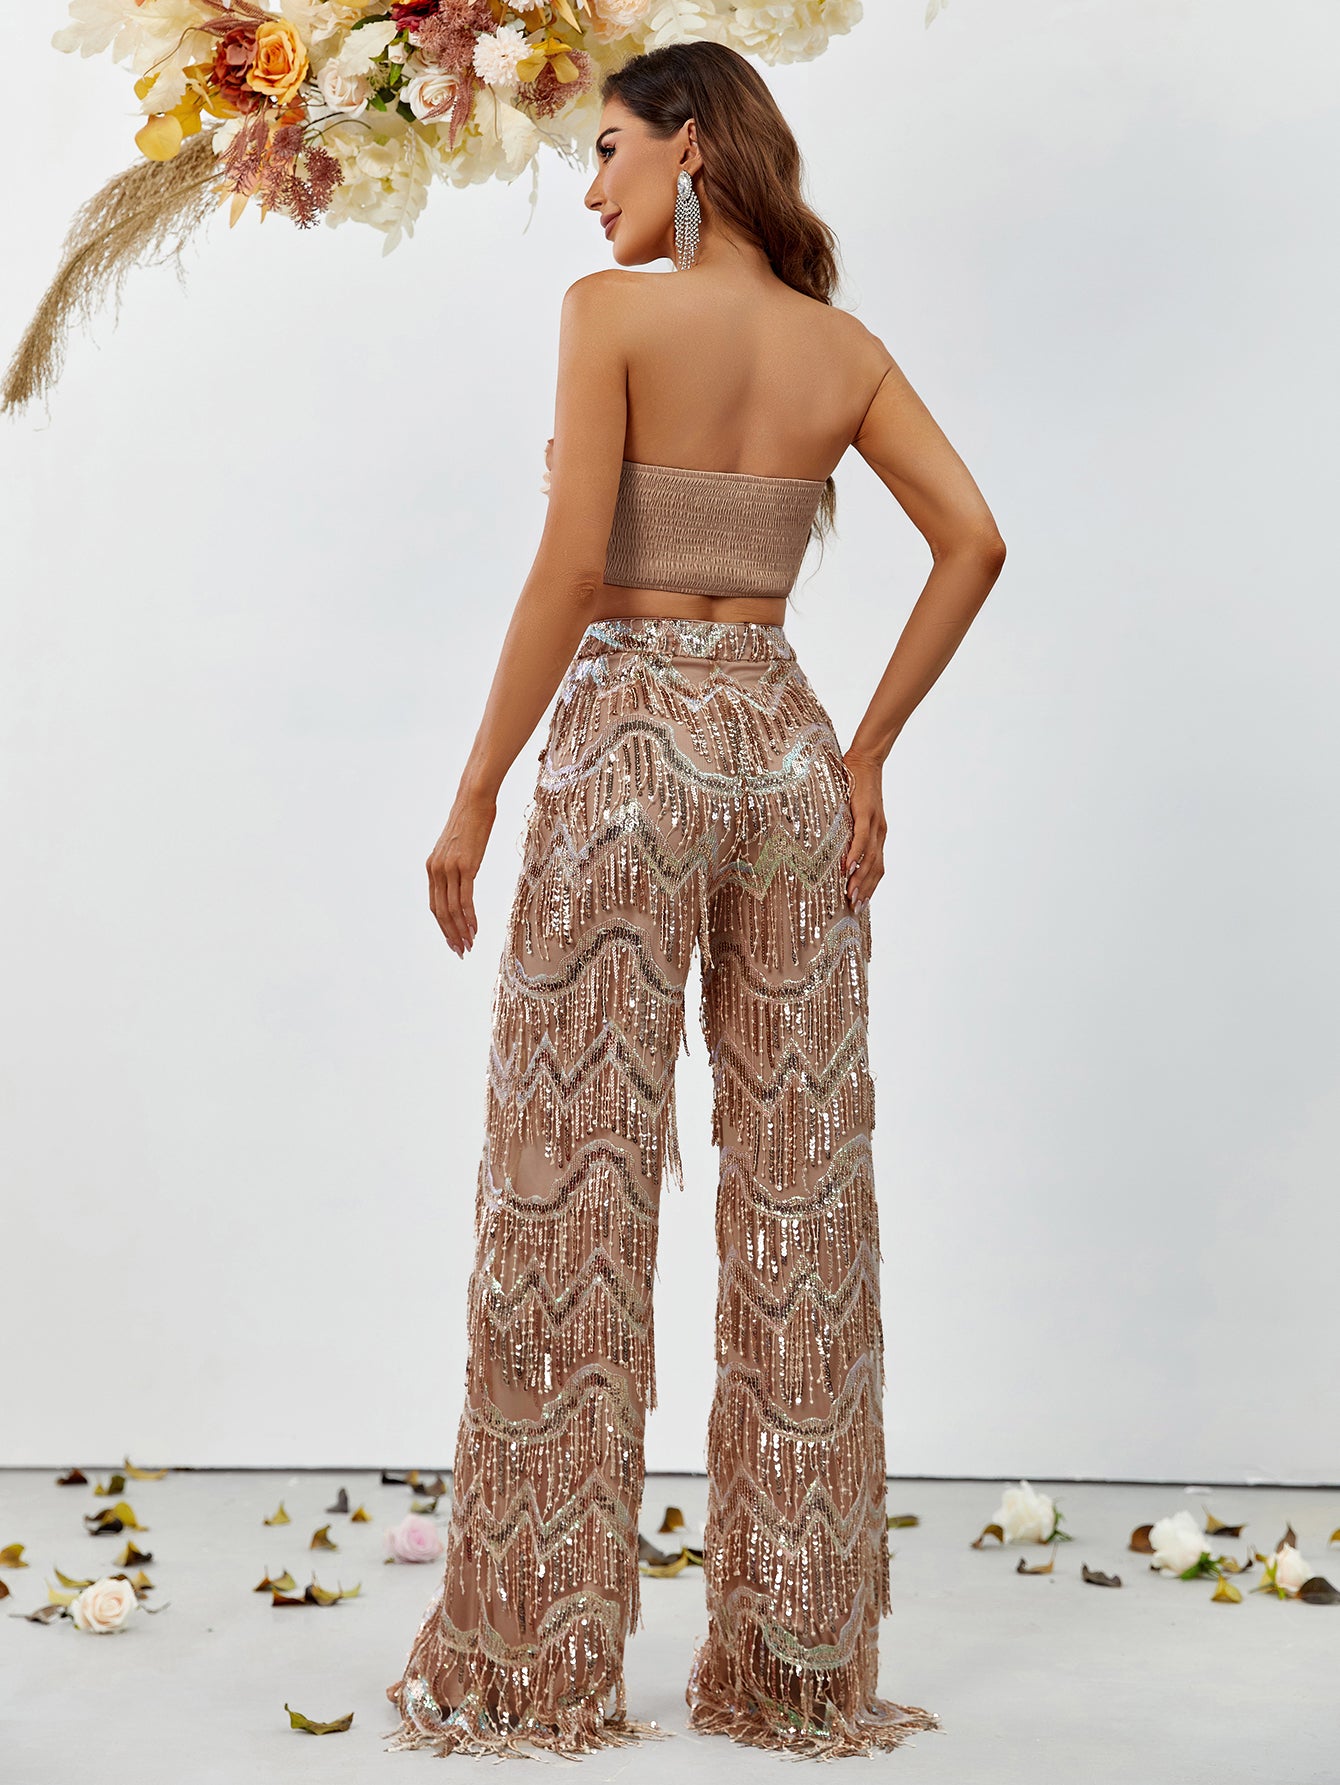 3D Flower Tube Top & Sequin Fringed Pants